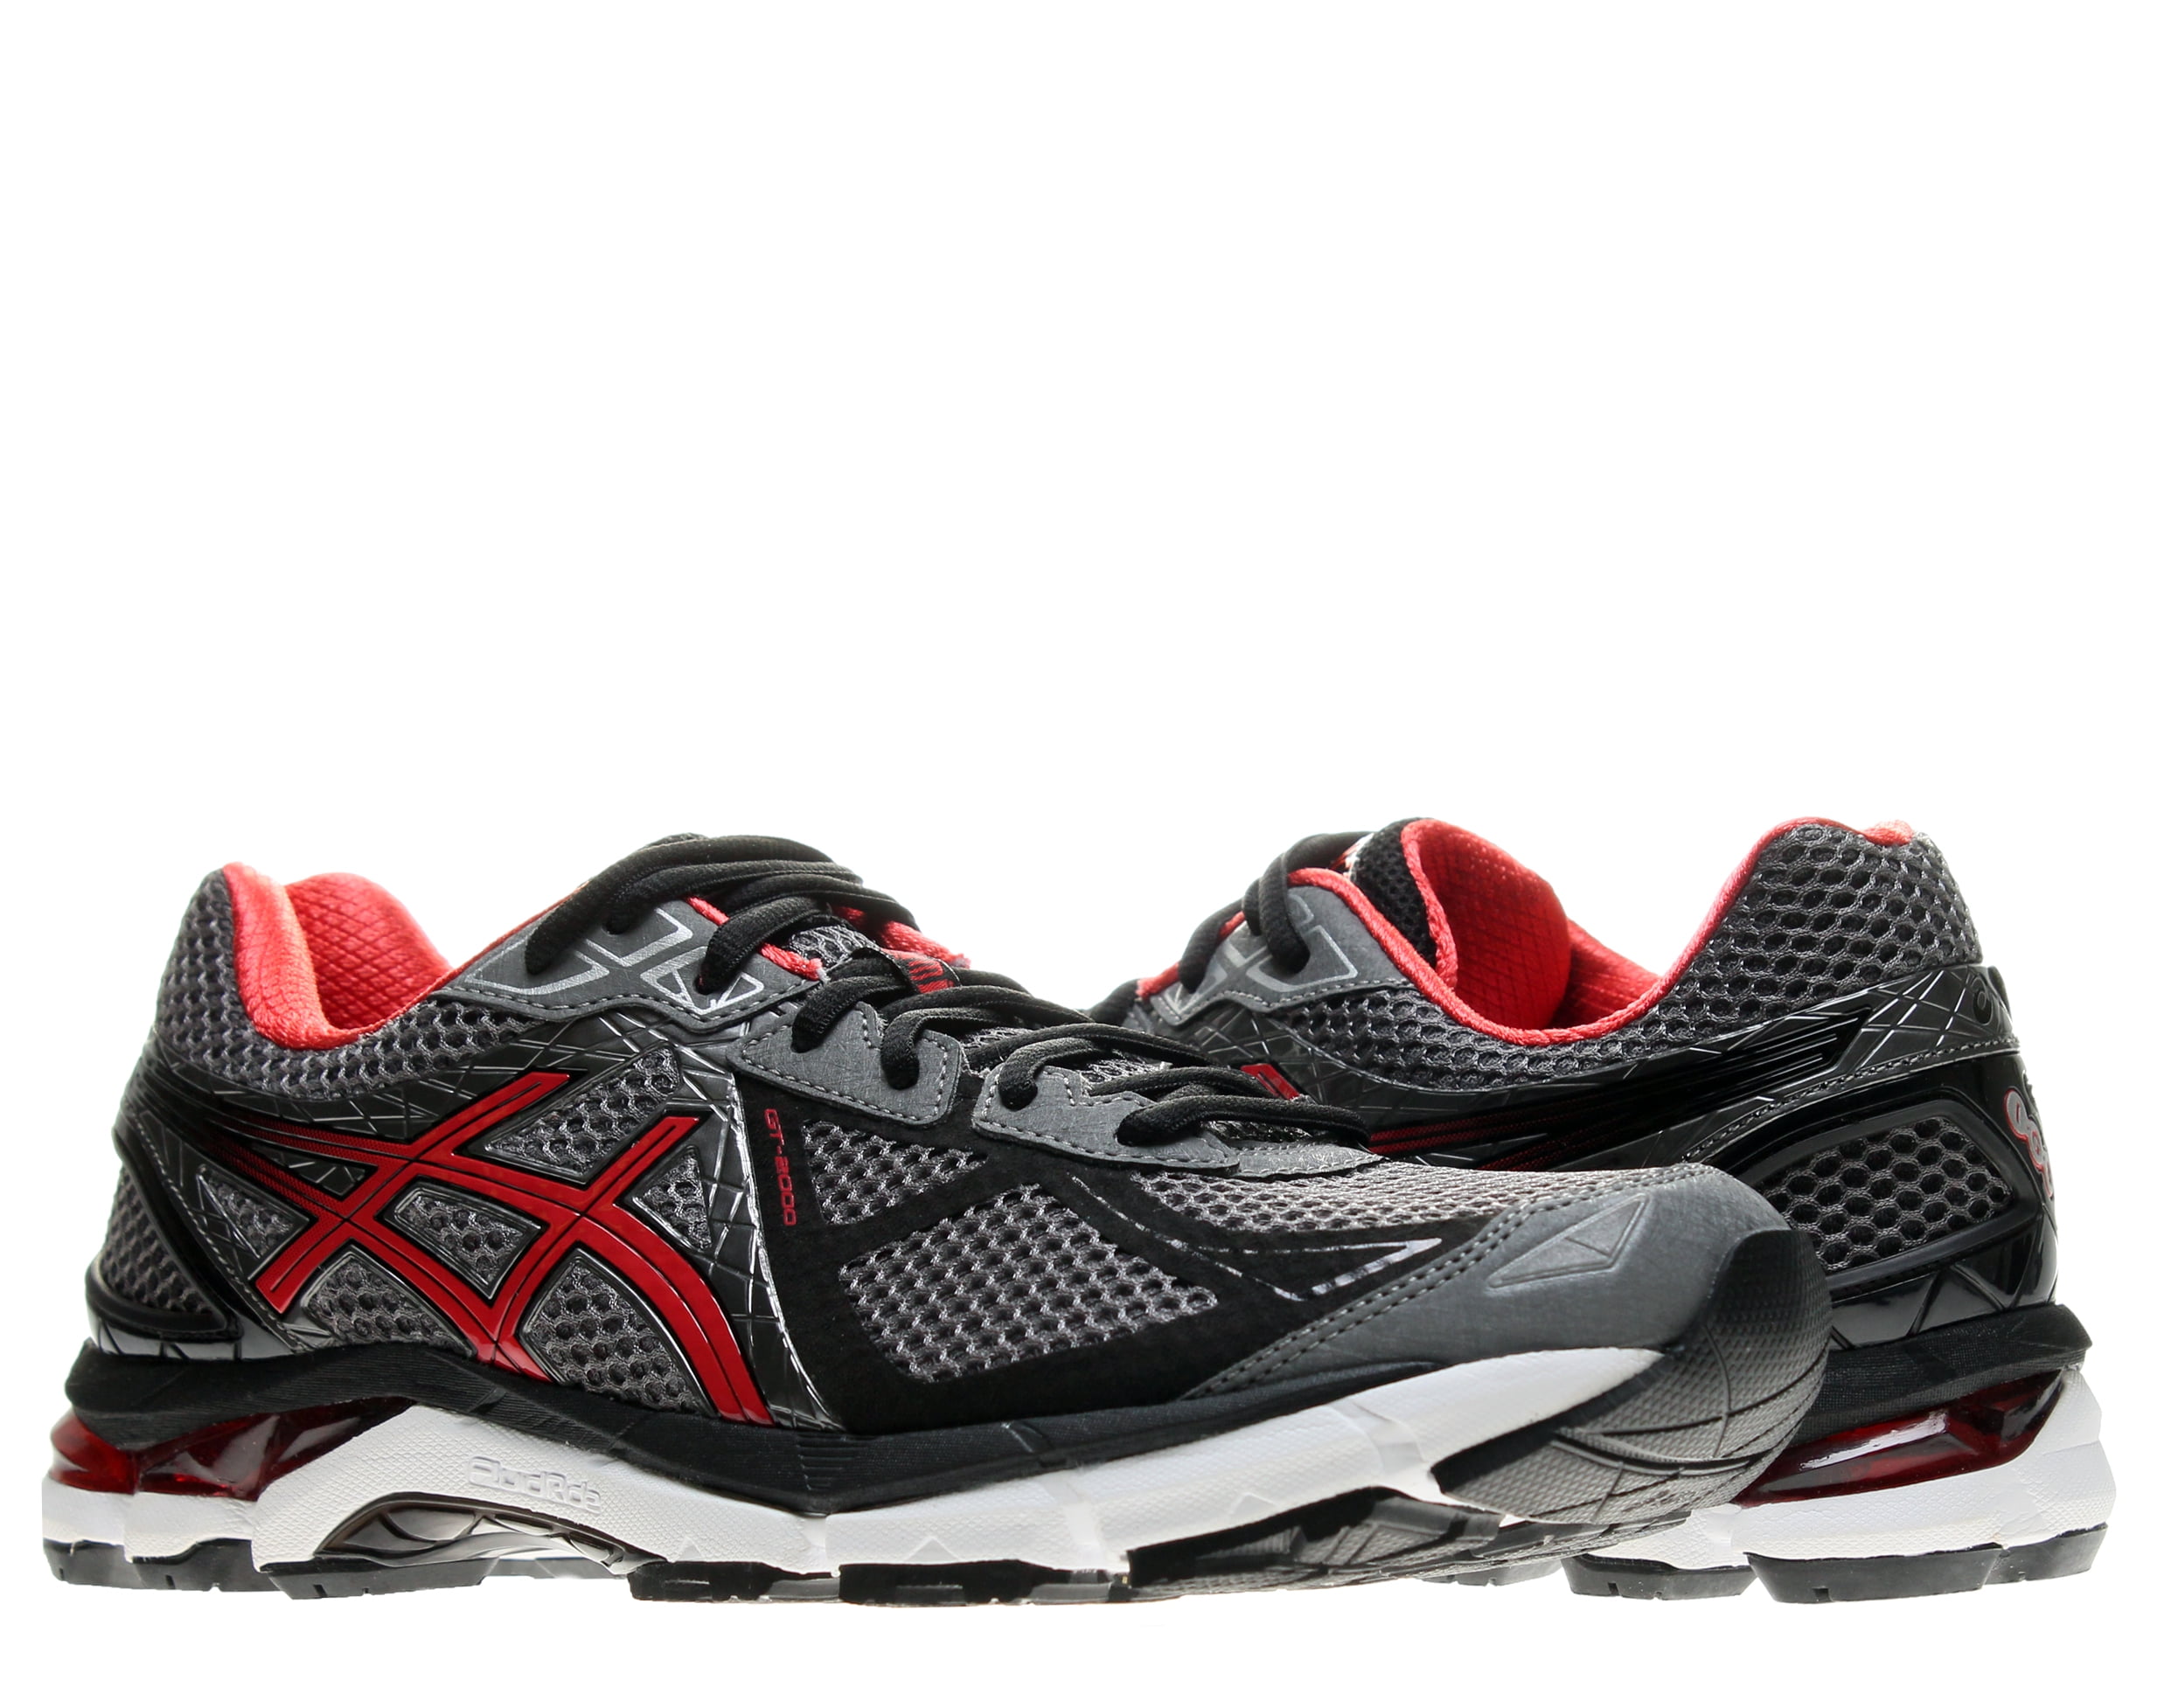 ASICS - ASICS GT-2000 3 Carbon/Red Pepper-Black Men's Running Shoes T500N-7428  Size 9.5 - Walmart.com - Walmart.com